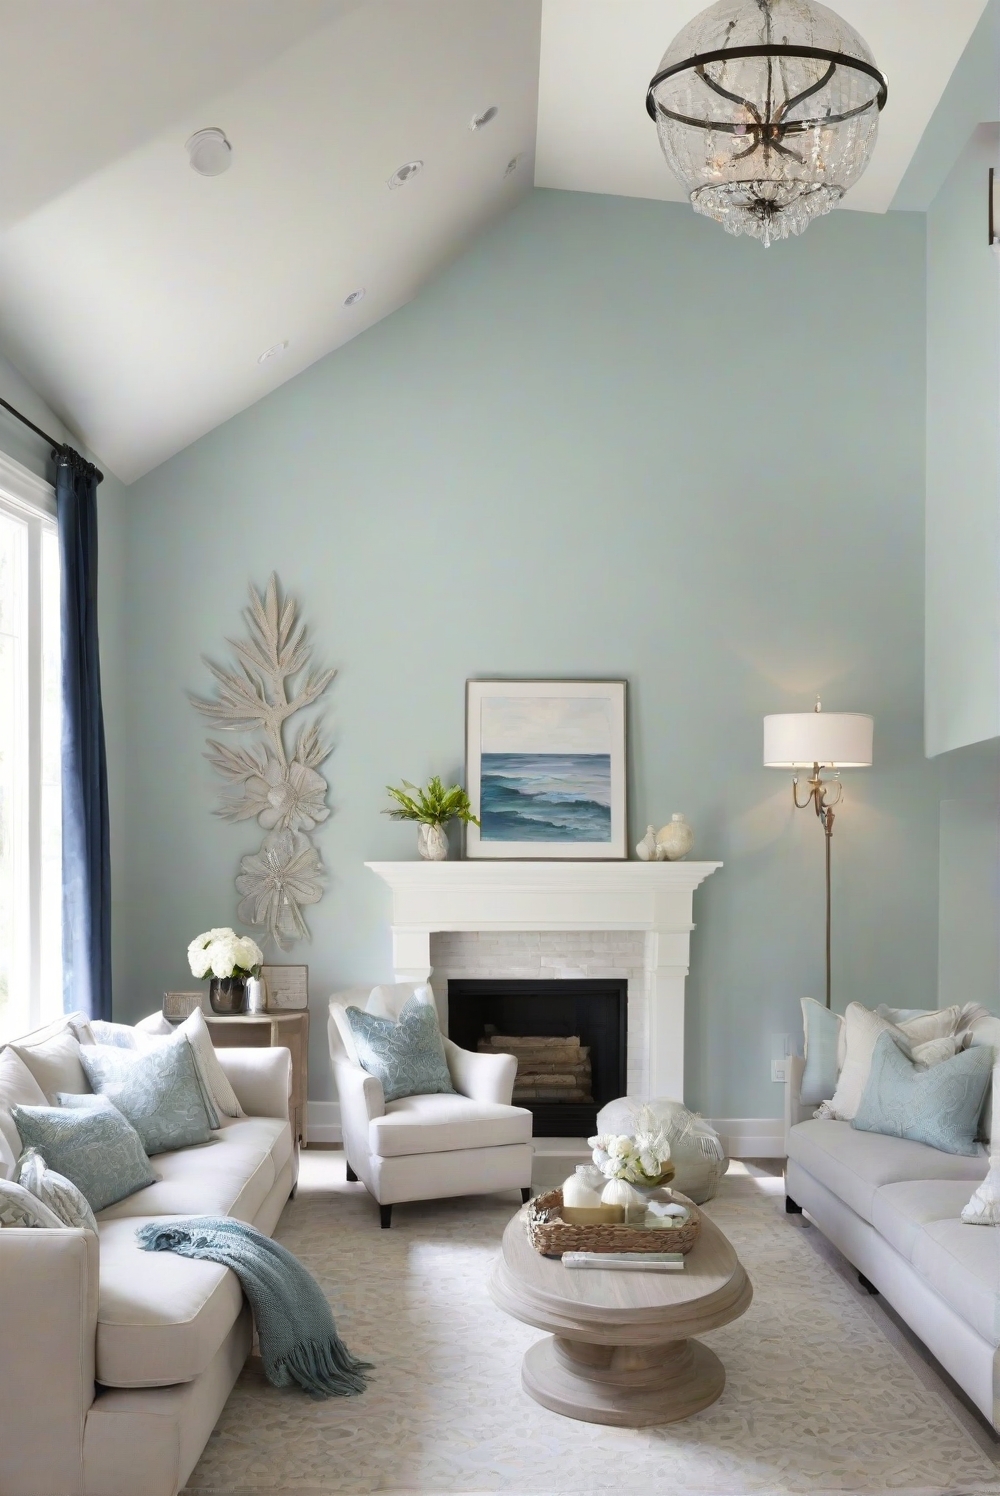 Sea salt, best paint, tranquility, interior design, wall paint, home decor, kitchen designs